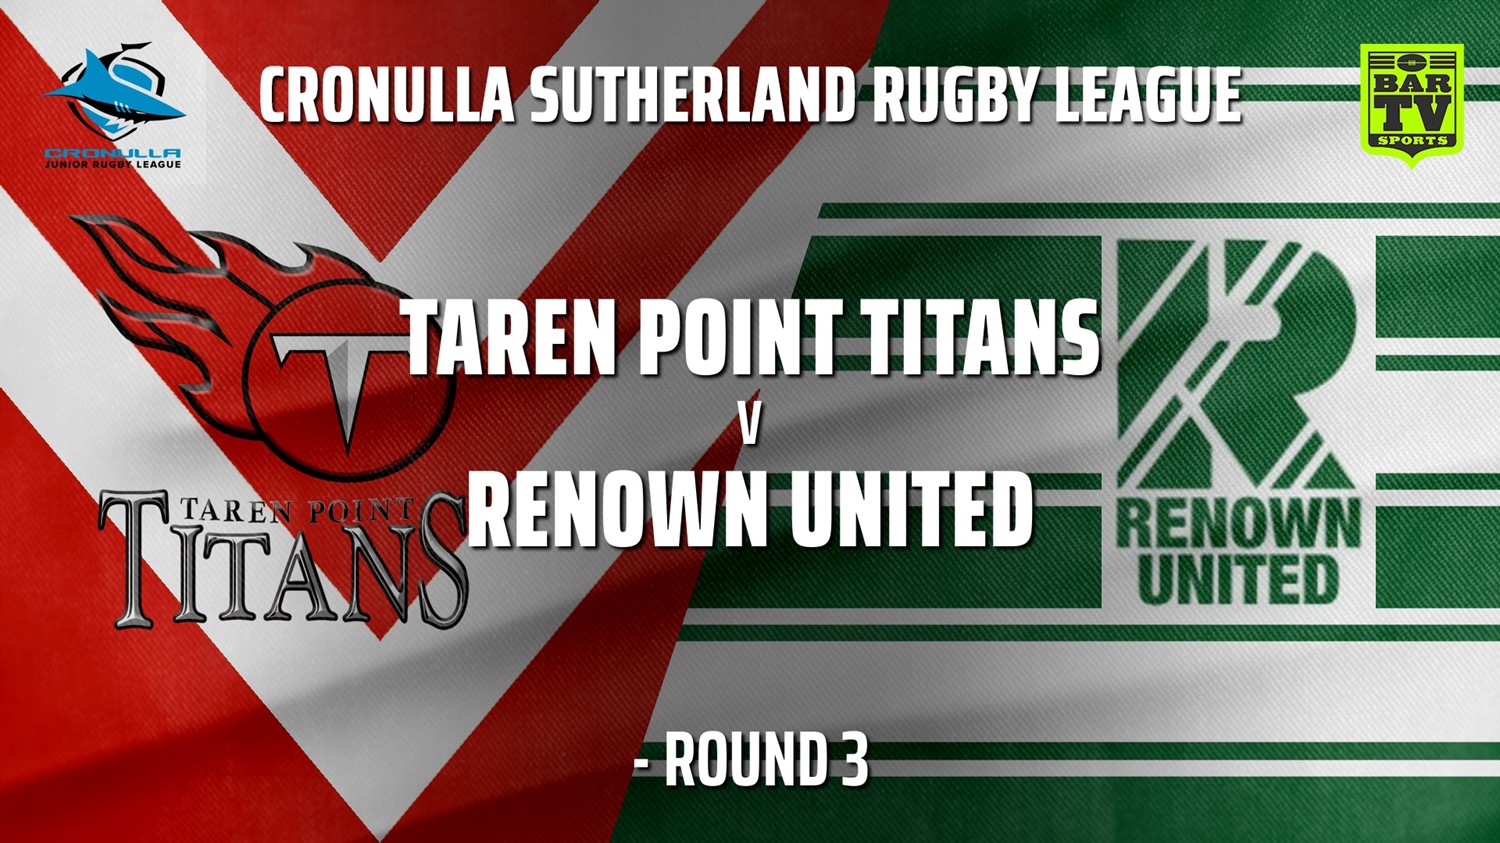 210516-Cronulla JRL- Southern Under 16s Silver - Round 3 - Taren Point Titans v Renown United Minigame Slate Image